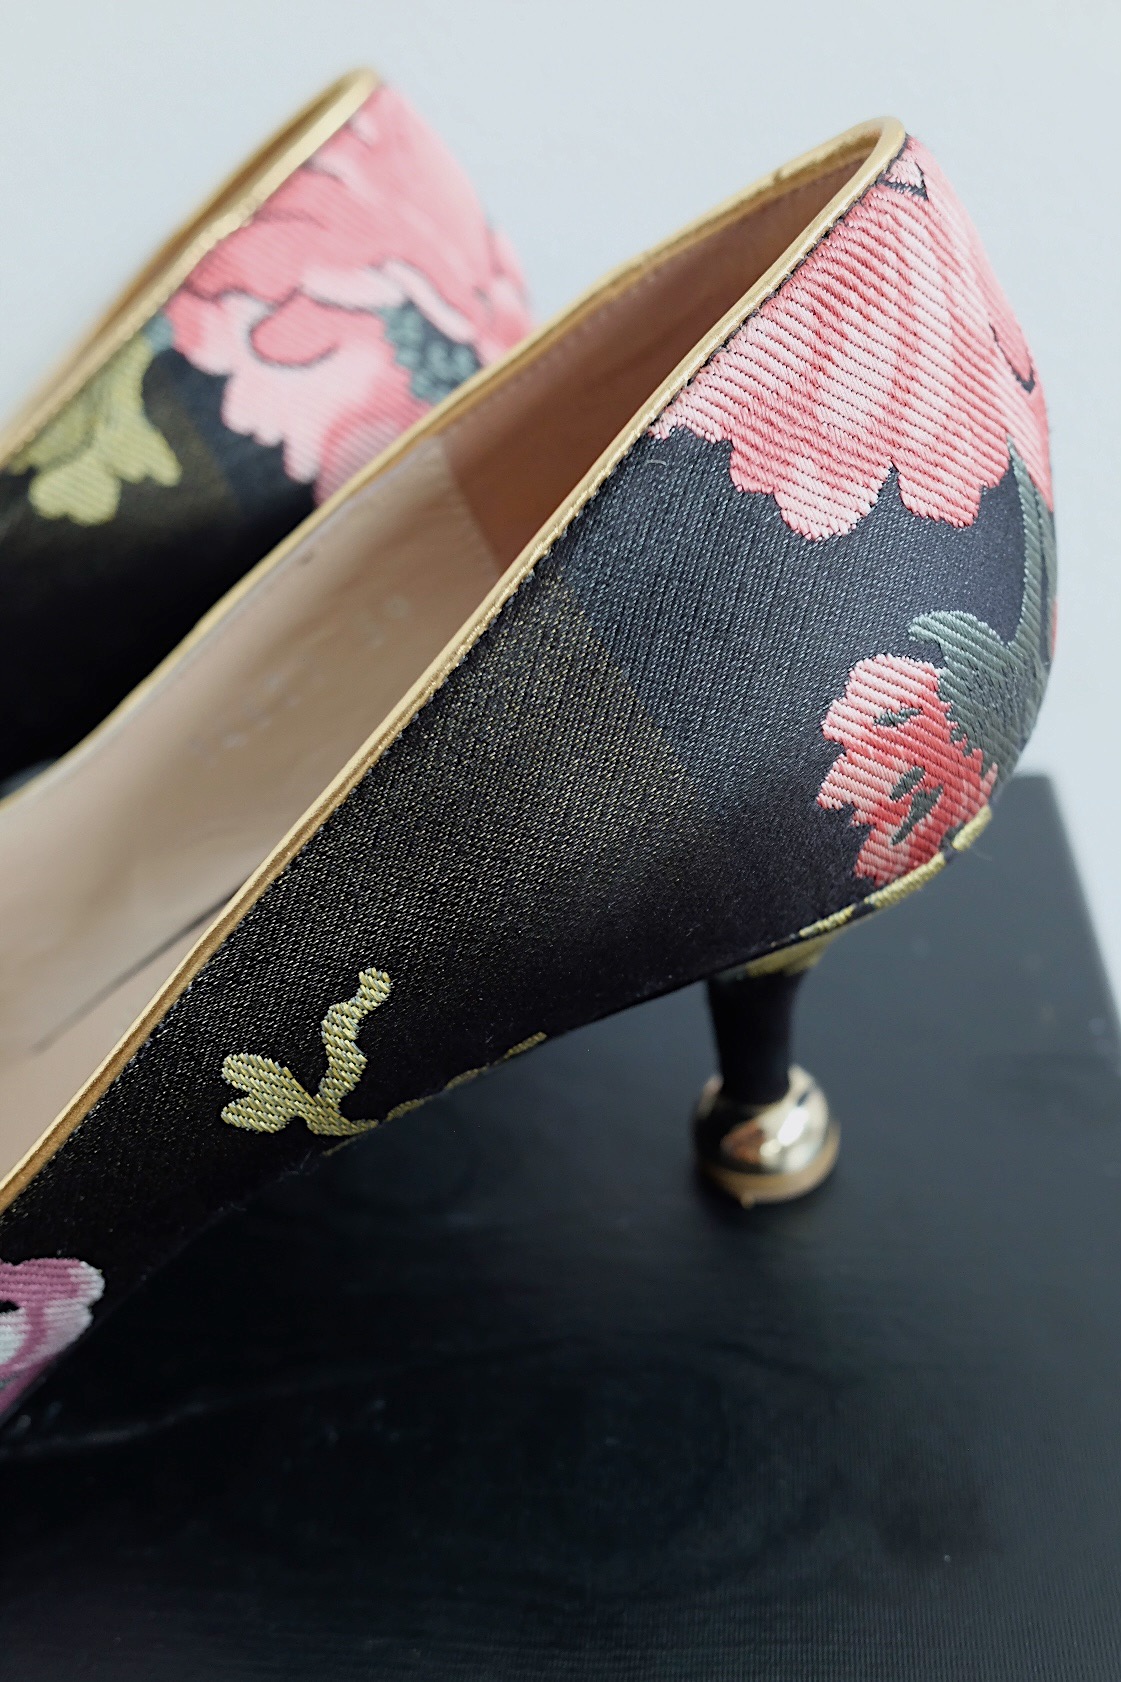 -40% (one and only) dries van noten floral kitten heels . size 39